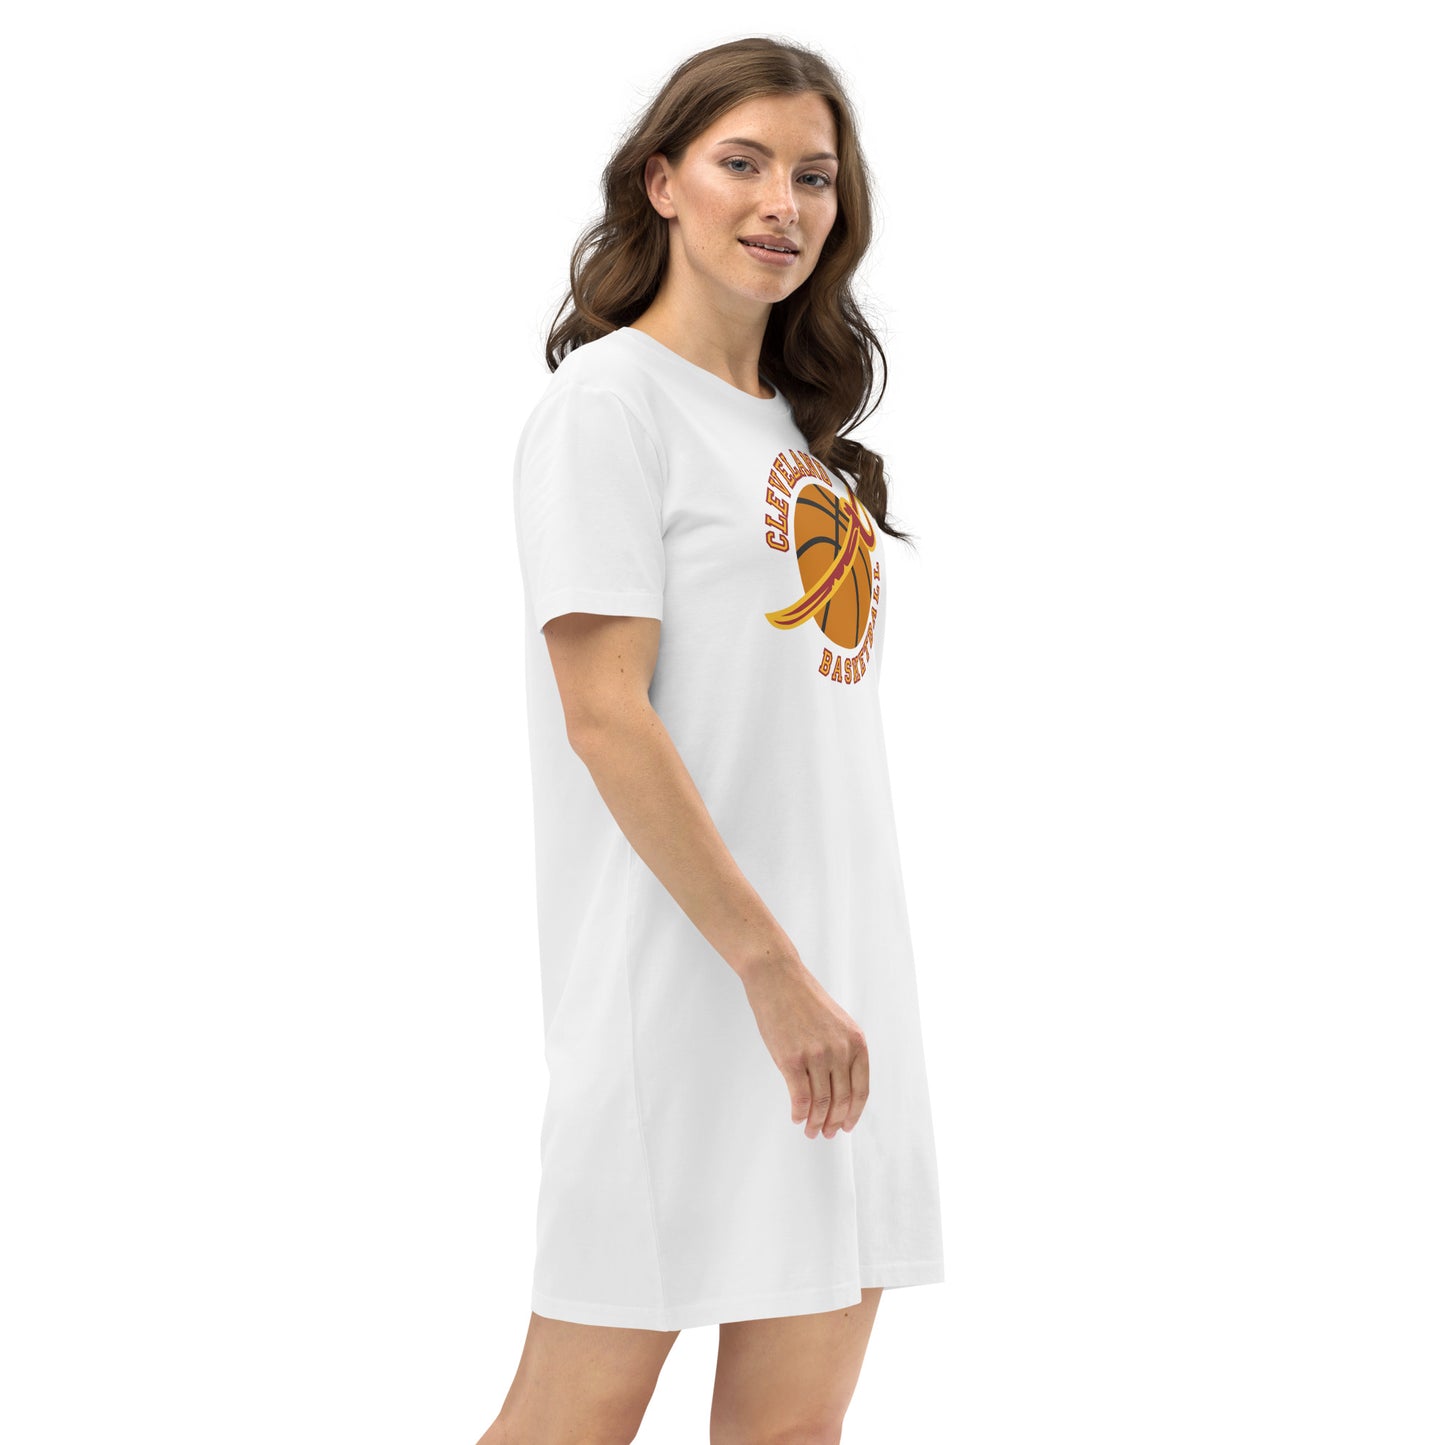 Cleveland Basketball Organic cotton t-shirt dress